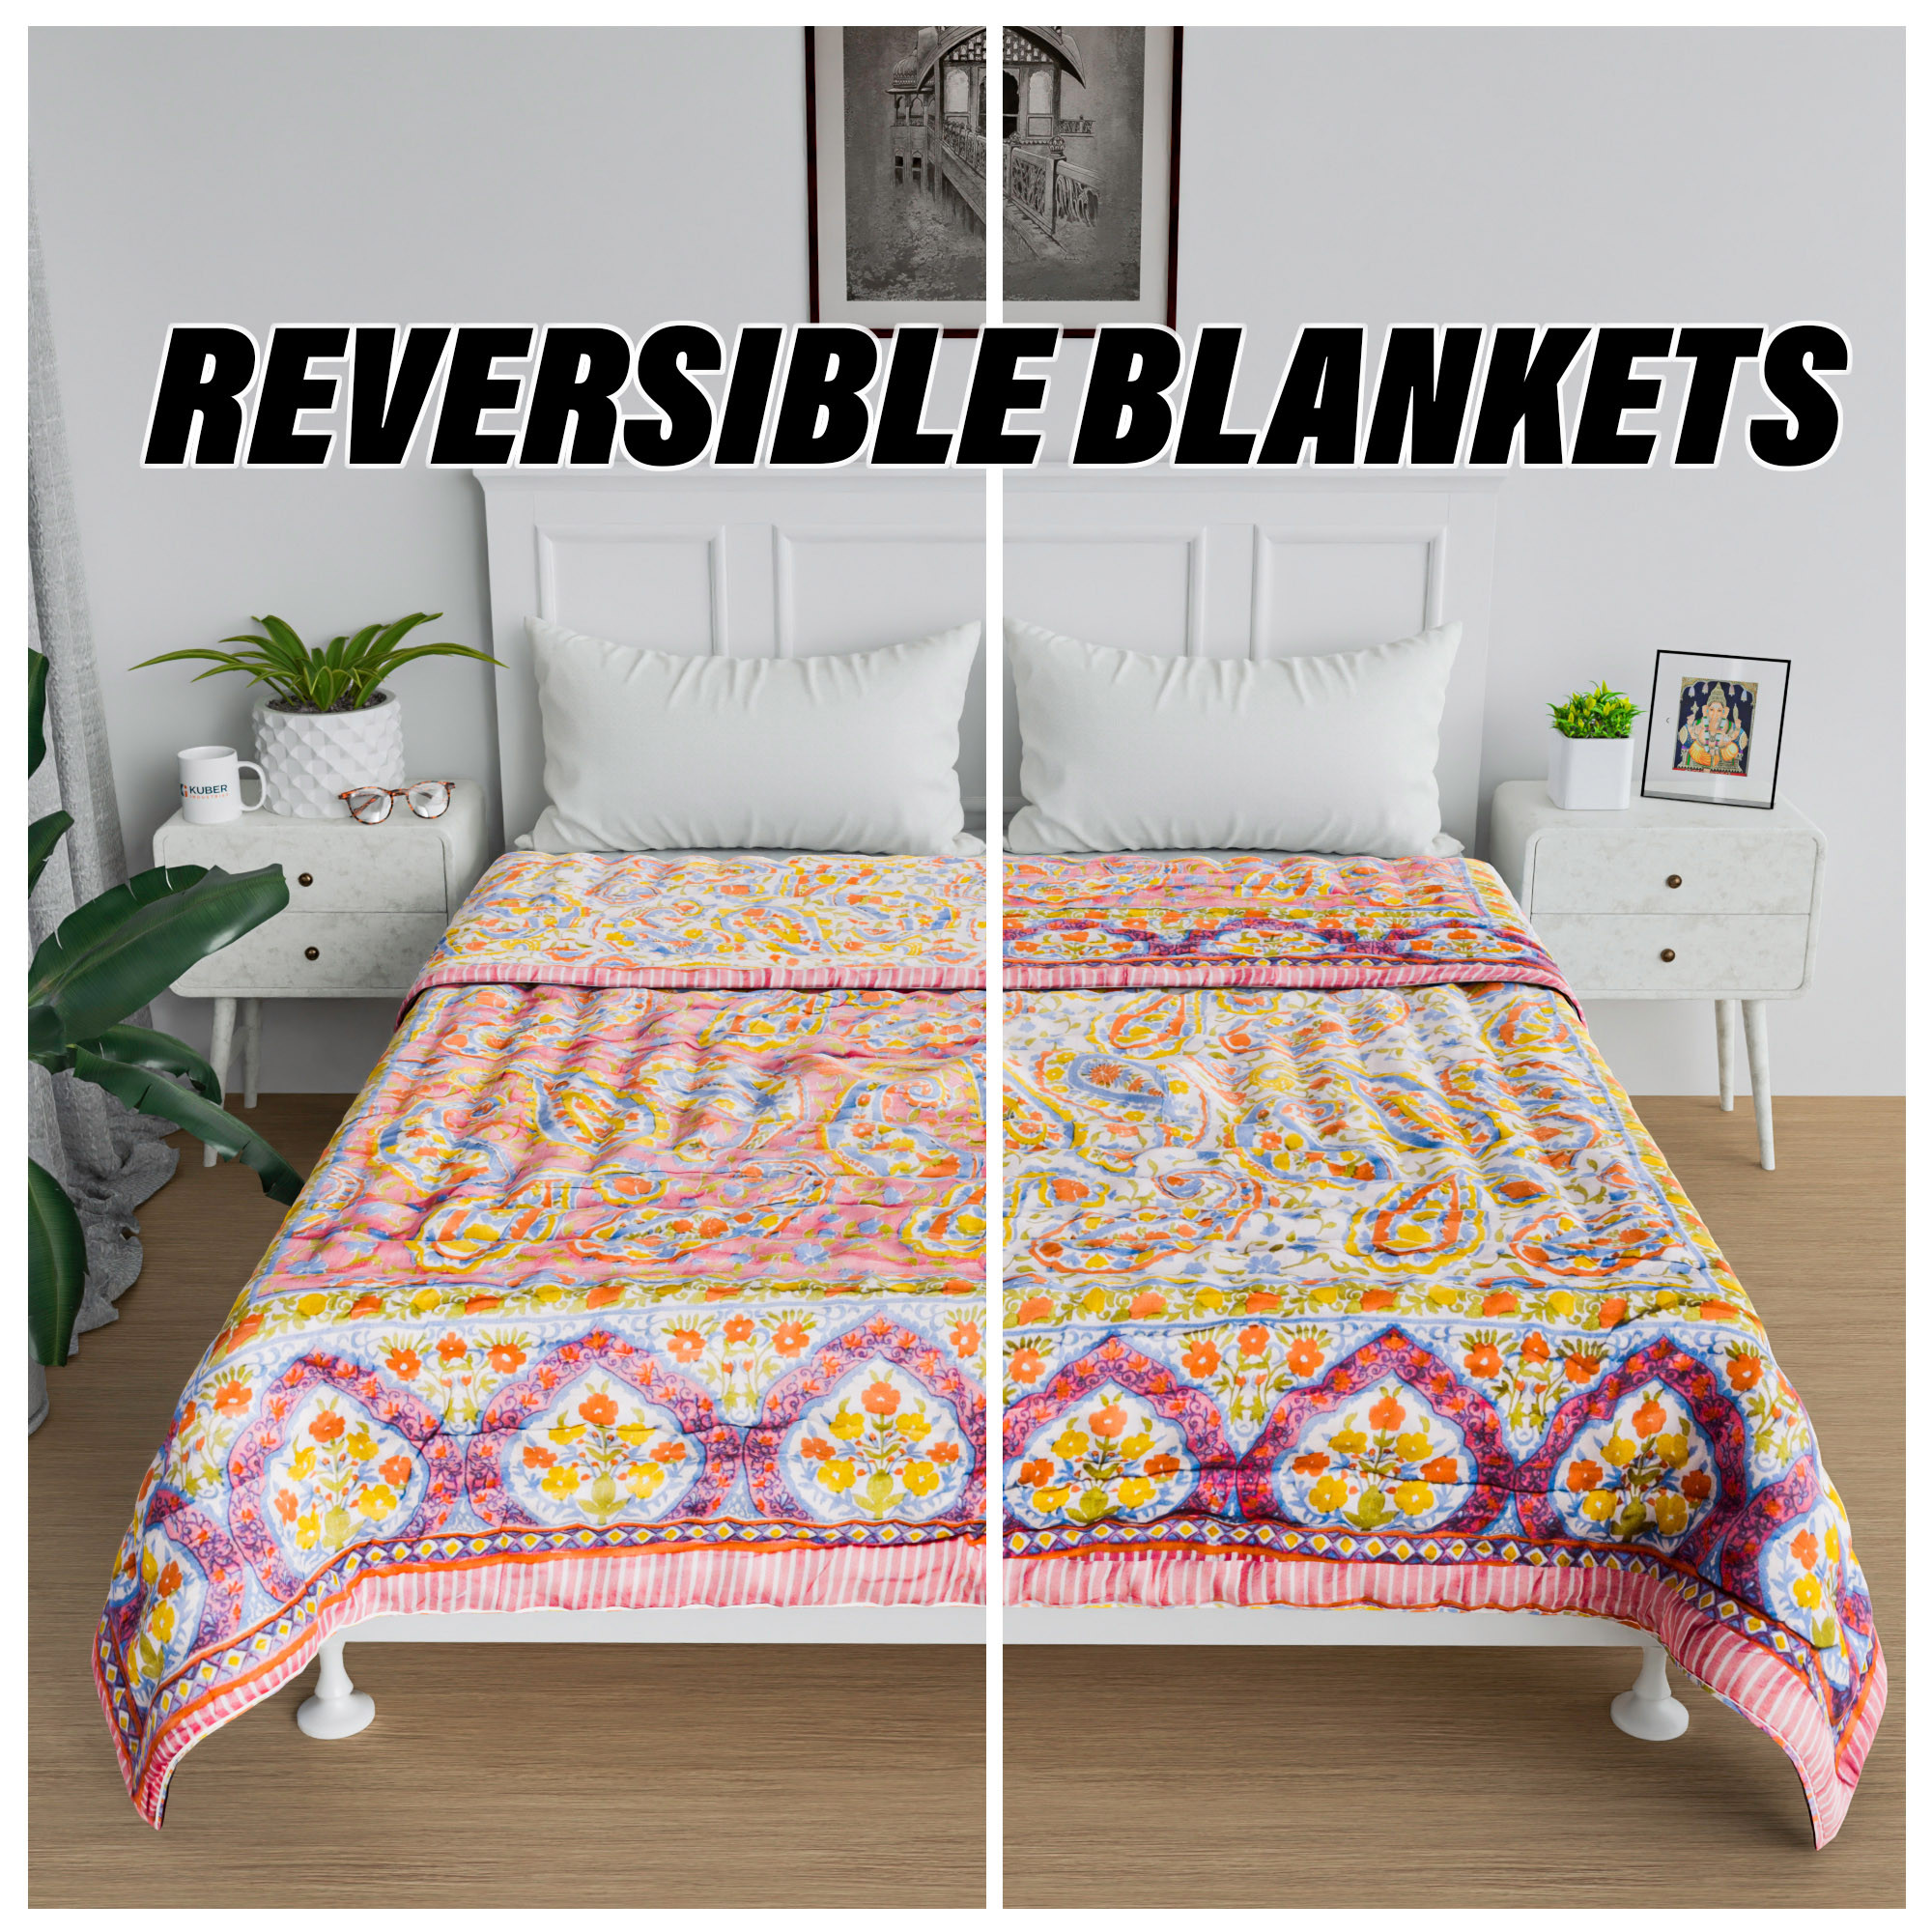 Kuber Industries Razai | Cotton Single Bed Blanket Rajai | Bedspread Quilt Set | Blanket for winter | Blanket for Bed | Bedding Comforter | Carry Flower Mul Mul Razai | Pink